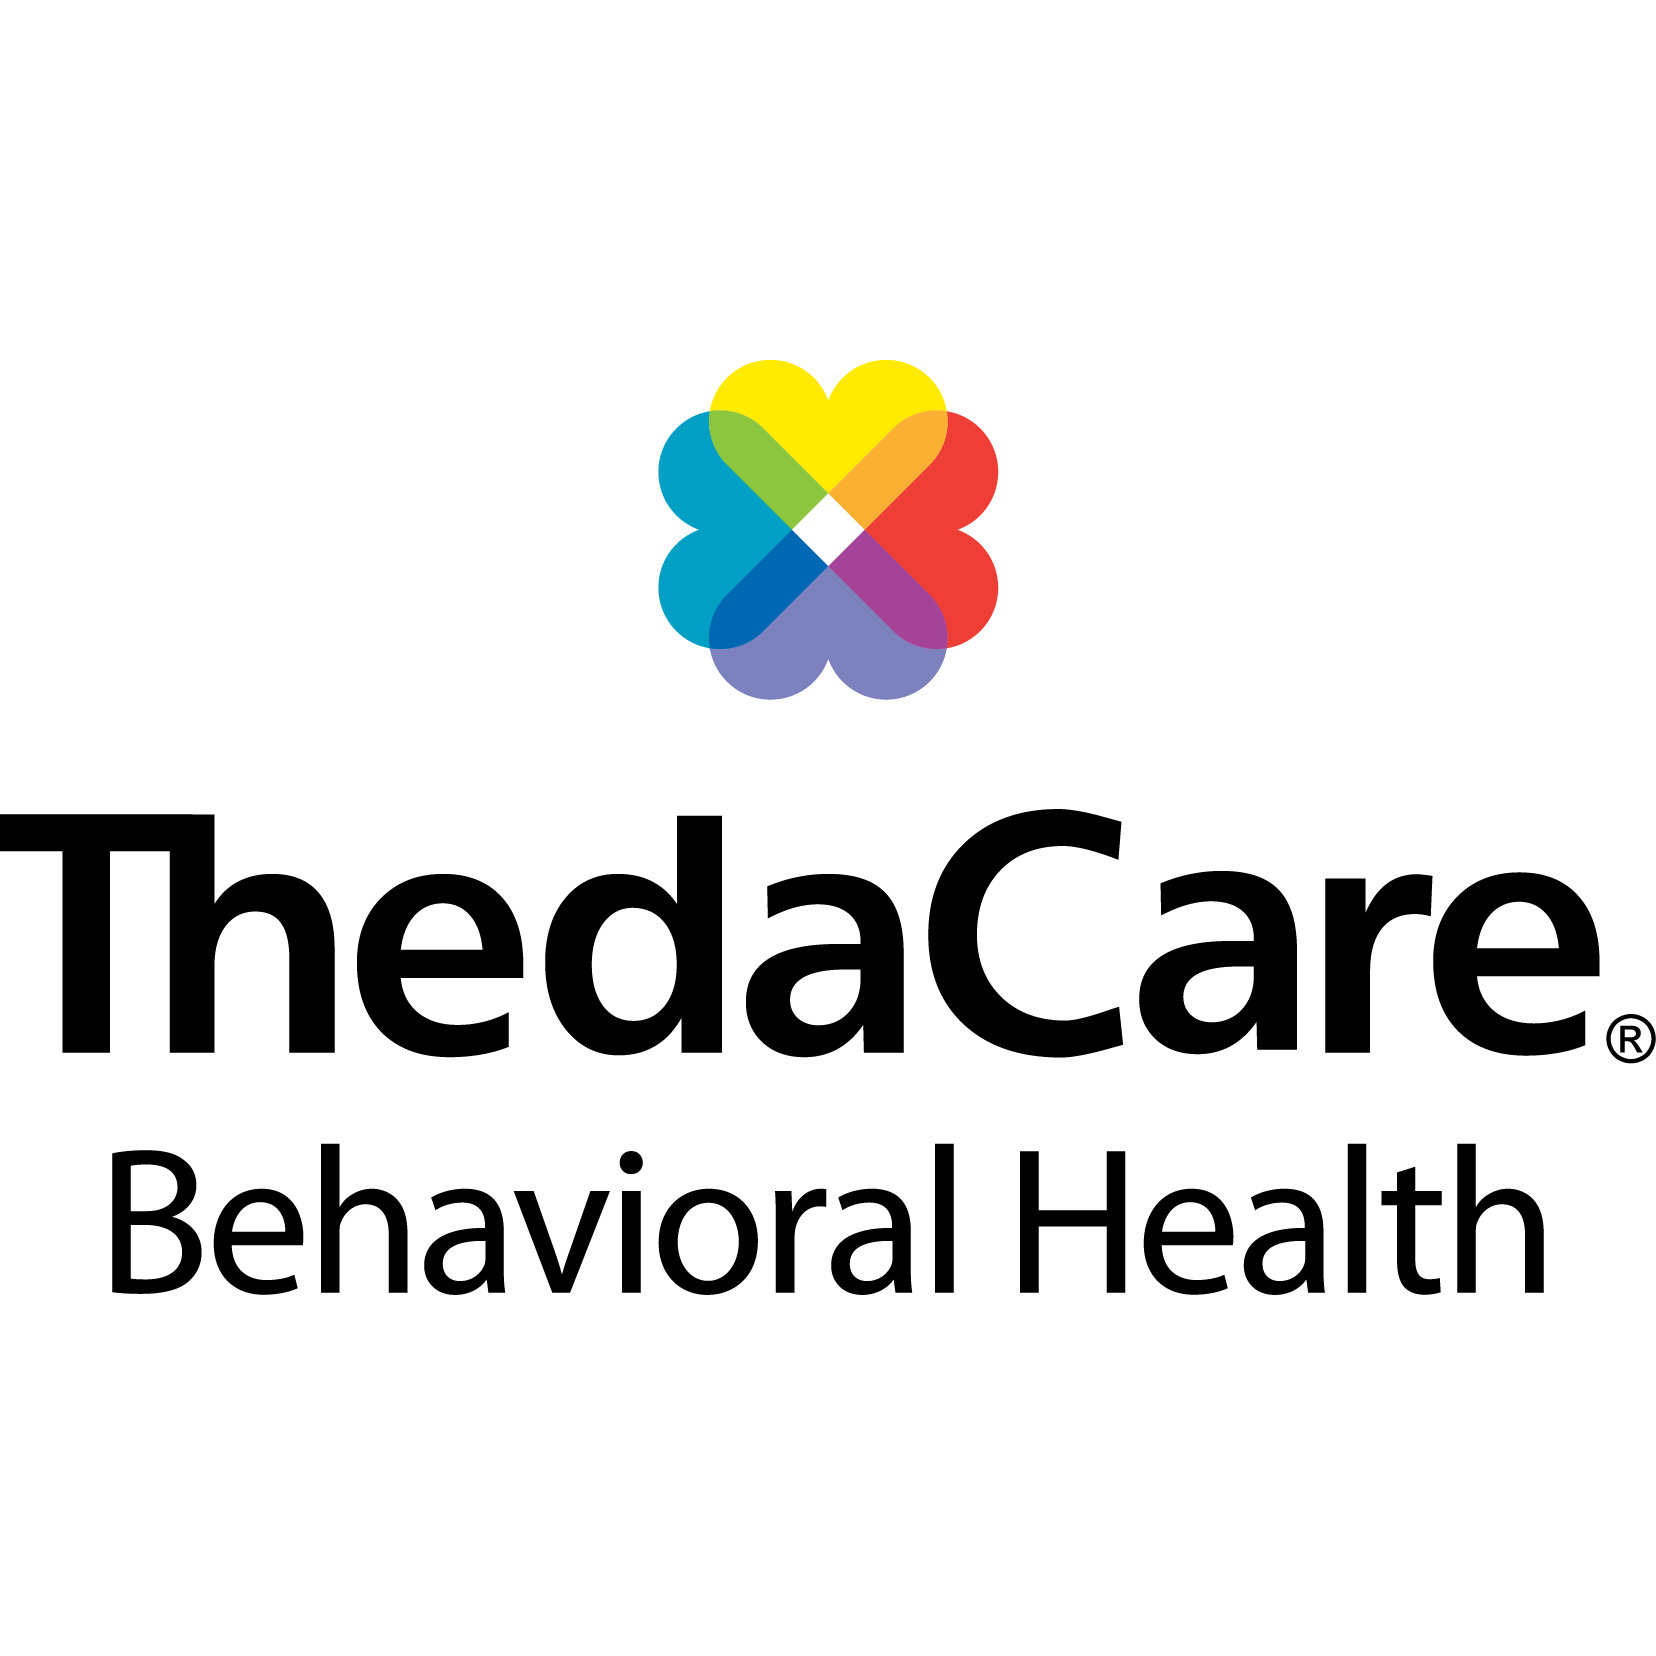 ThedaCare Behavioral Health-Menasha - Menasha, WI 54952 - (920)720-2300 | ShowMeLocal.com